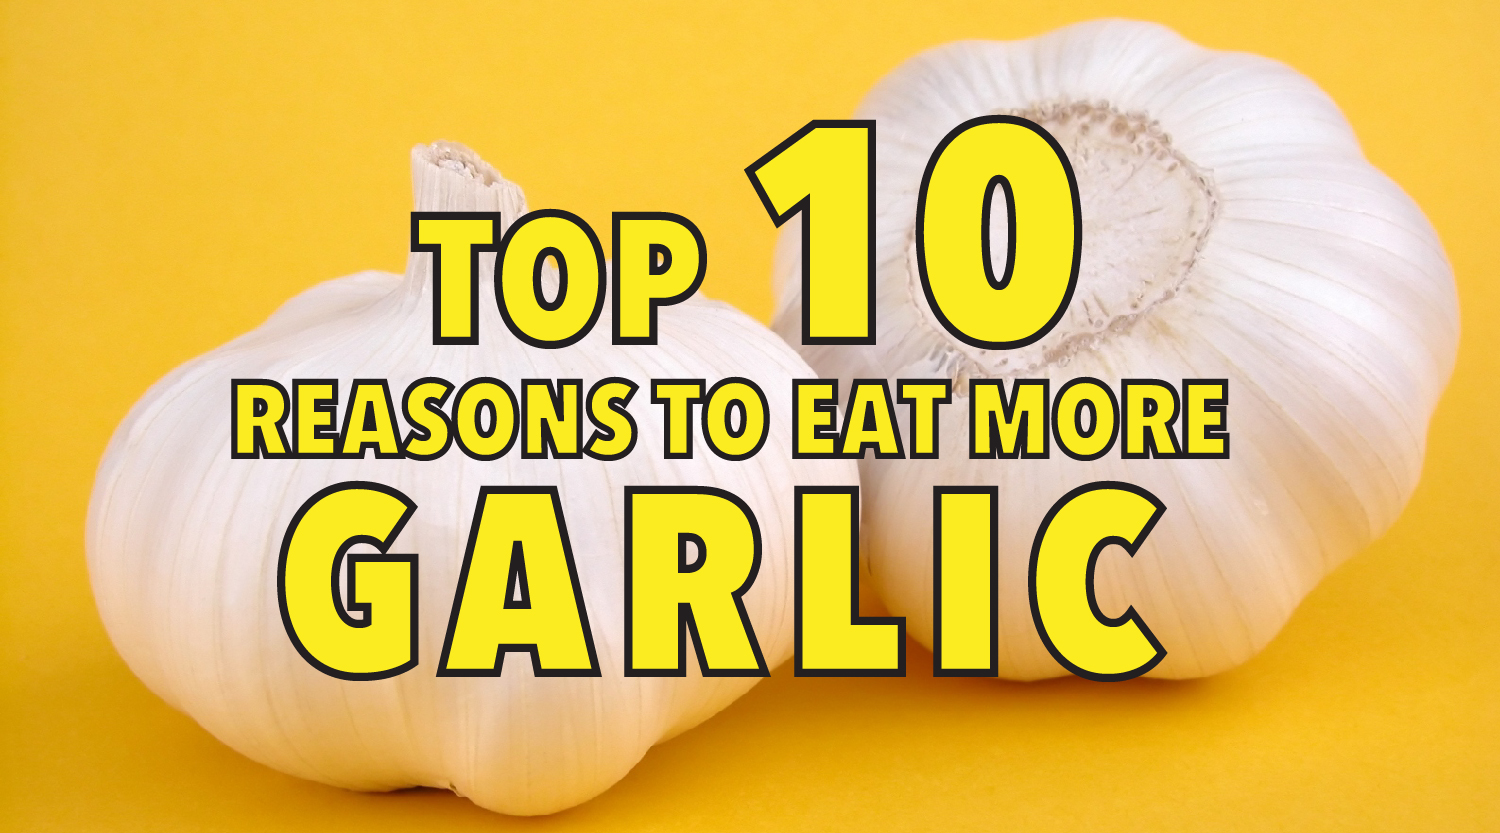 Top 10 reasons to eat more garlic